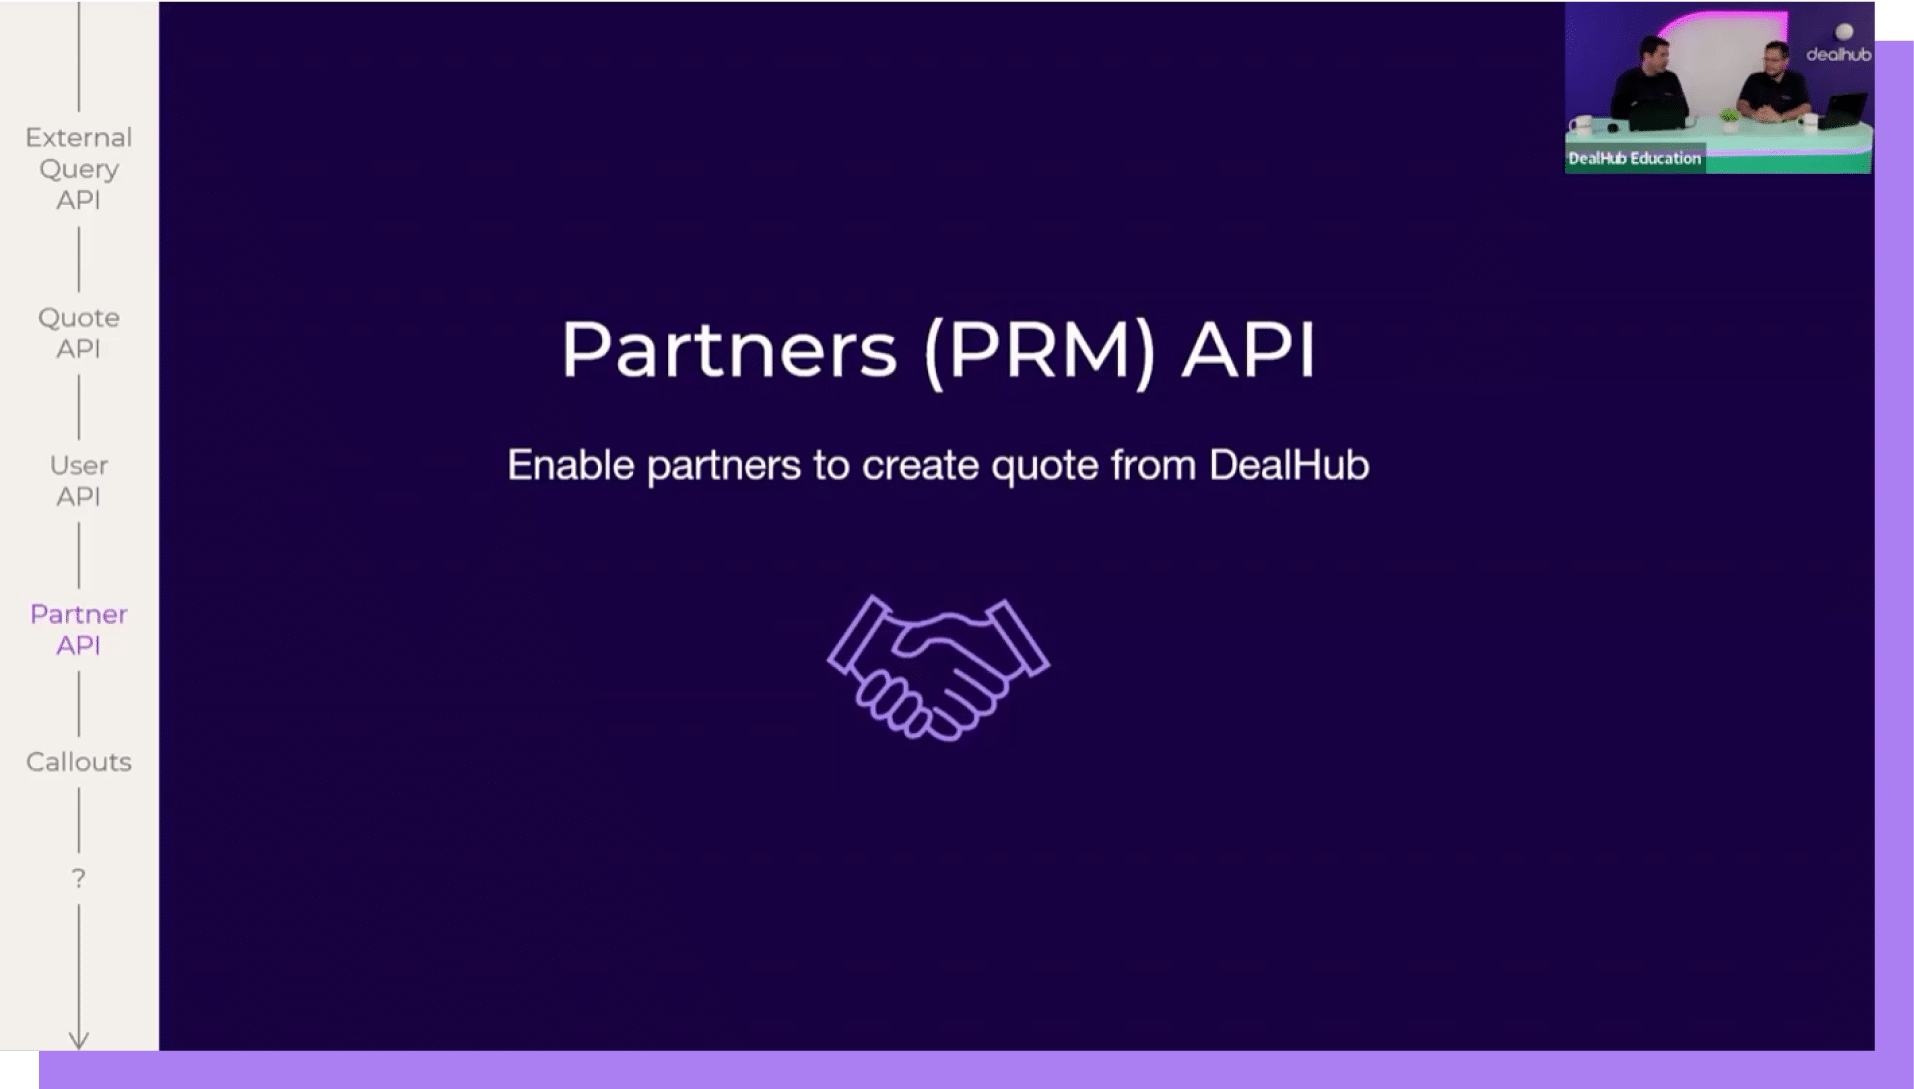 Partner API